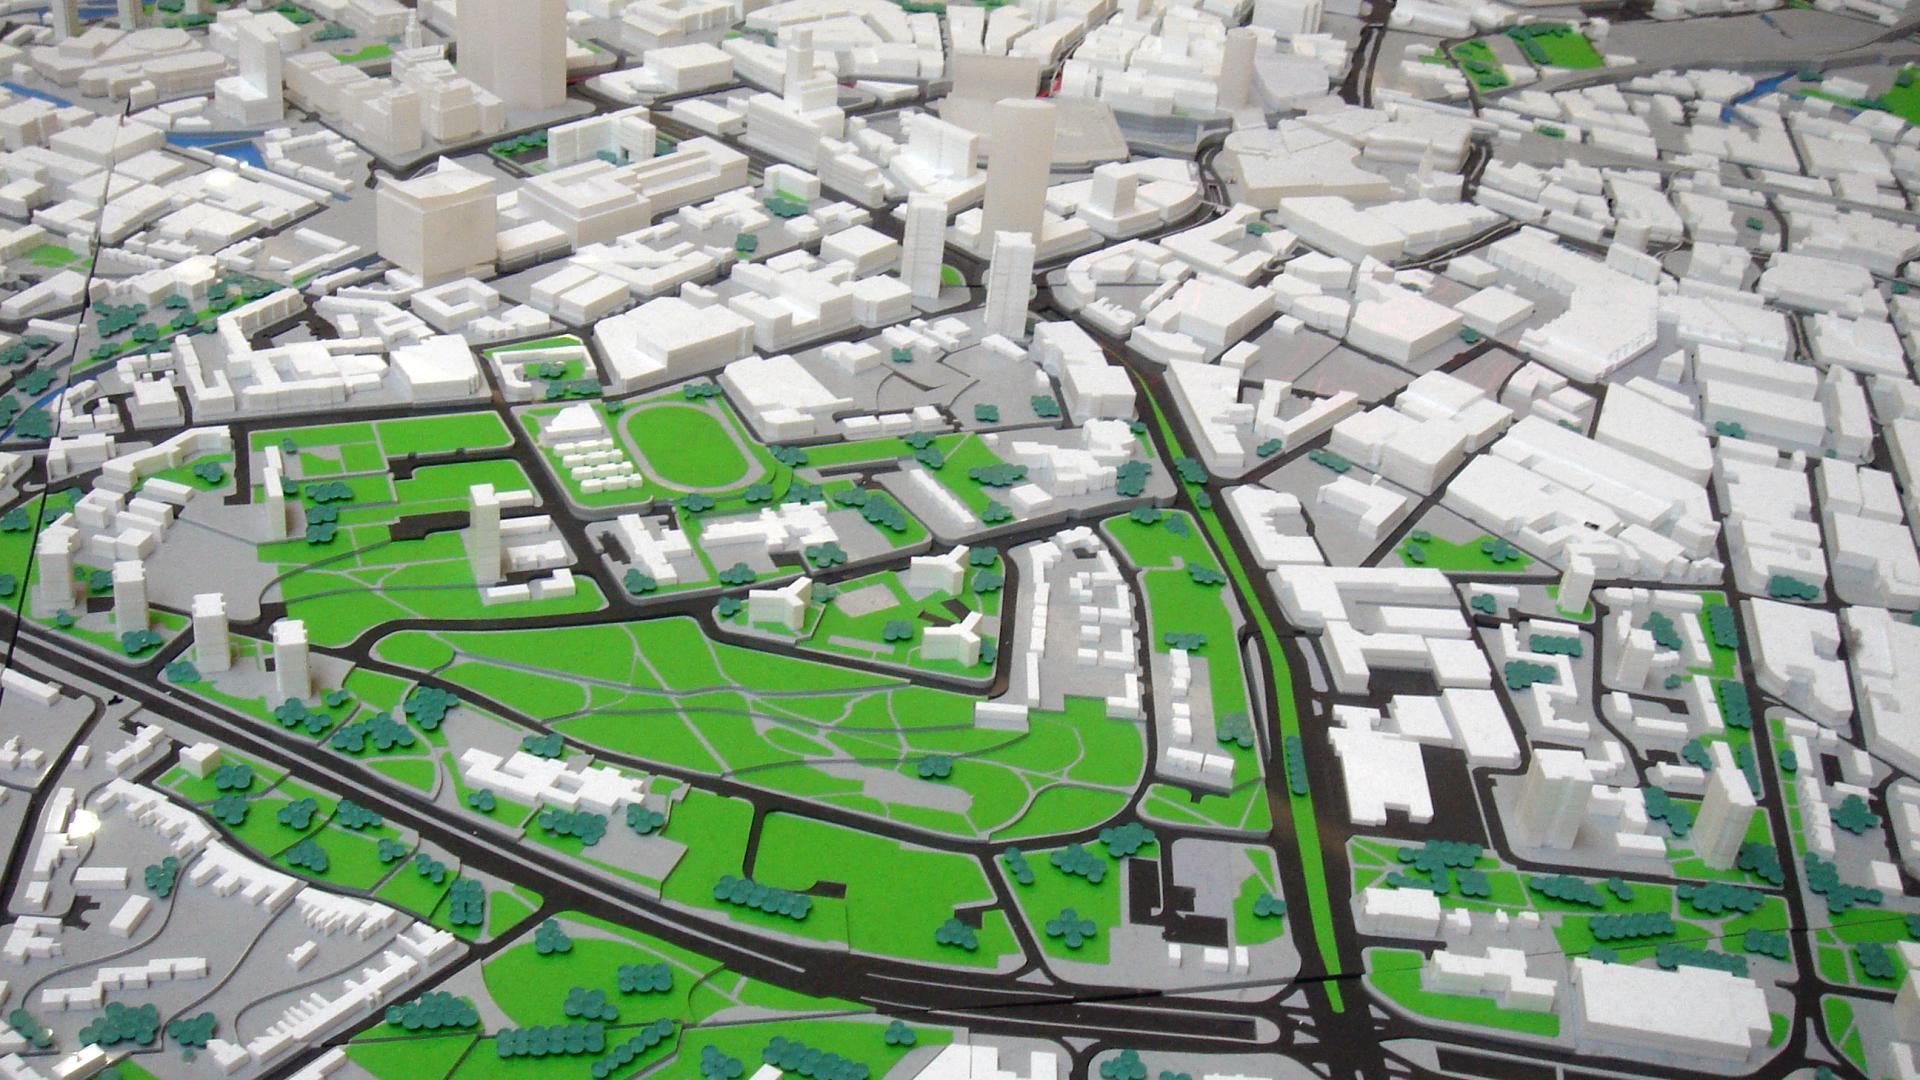 Computer generated plan of greening city